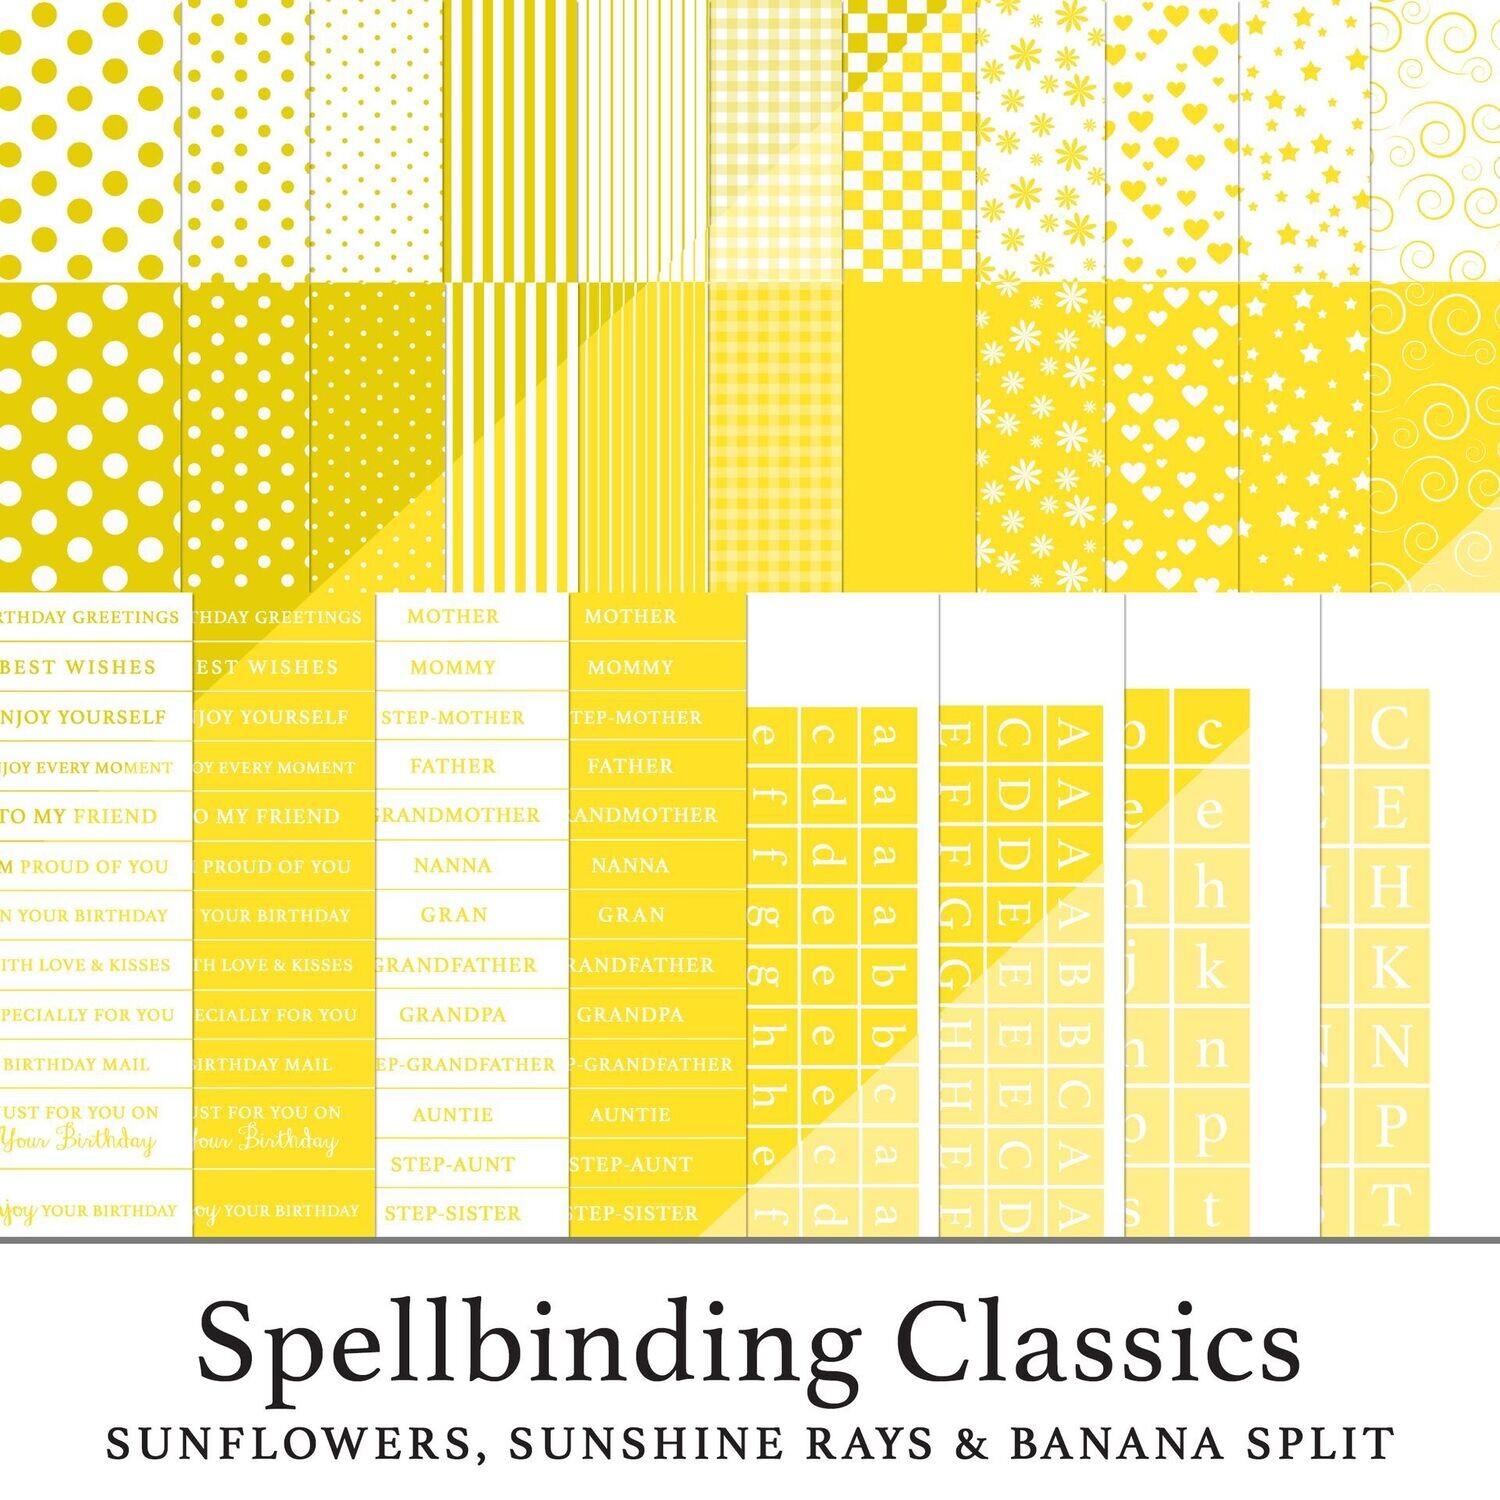 Spellbinding Classics Yellows - Sunflowers, Sunshine Rays & Banana Split Digital Kit BUNDLE